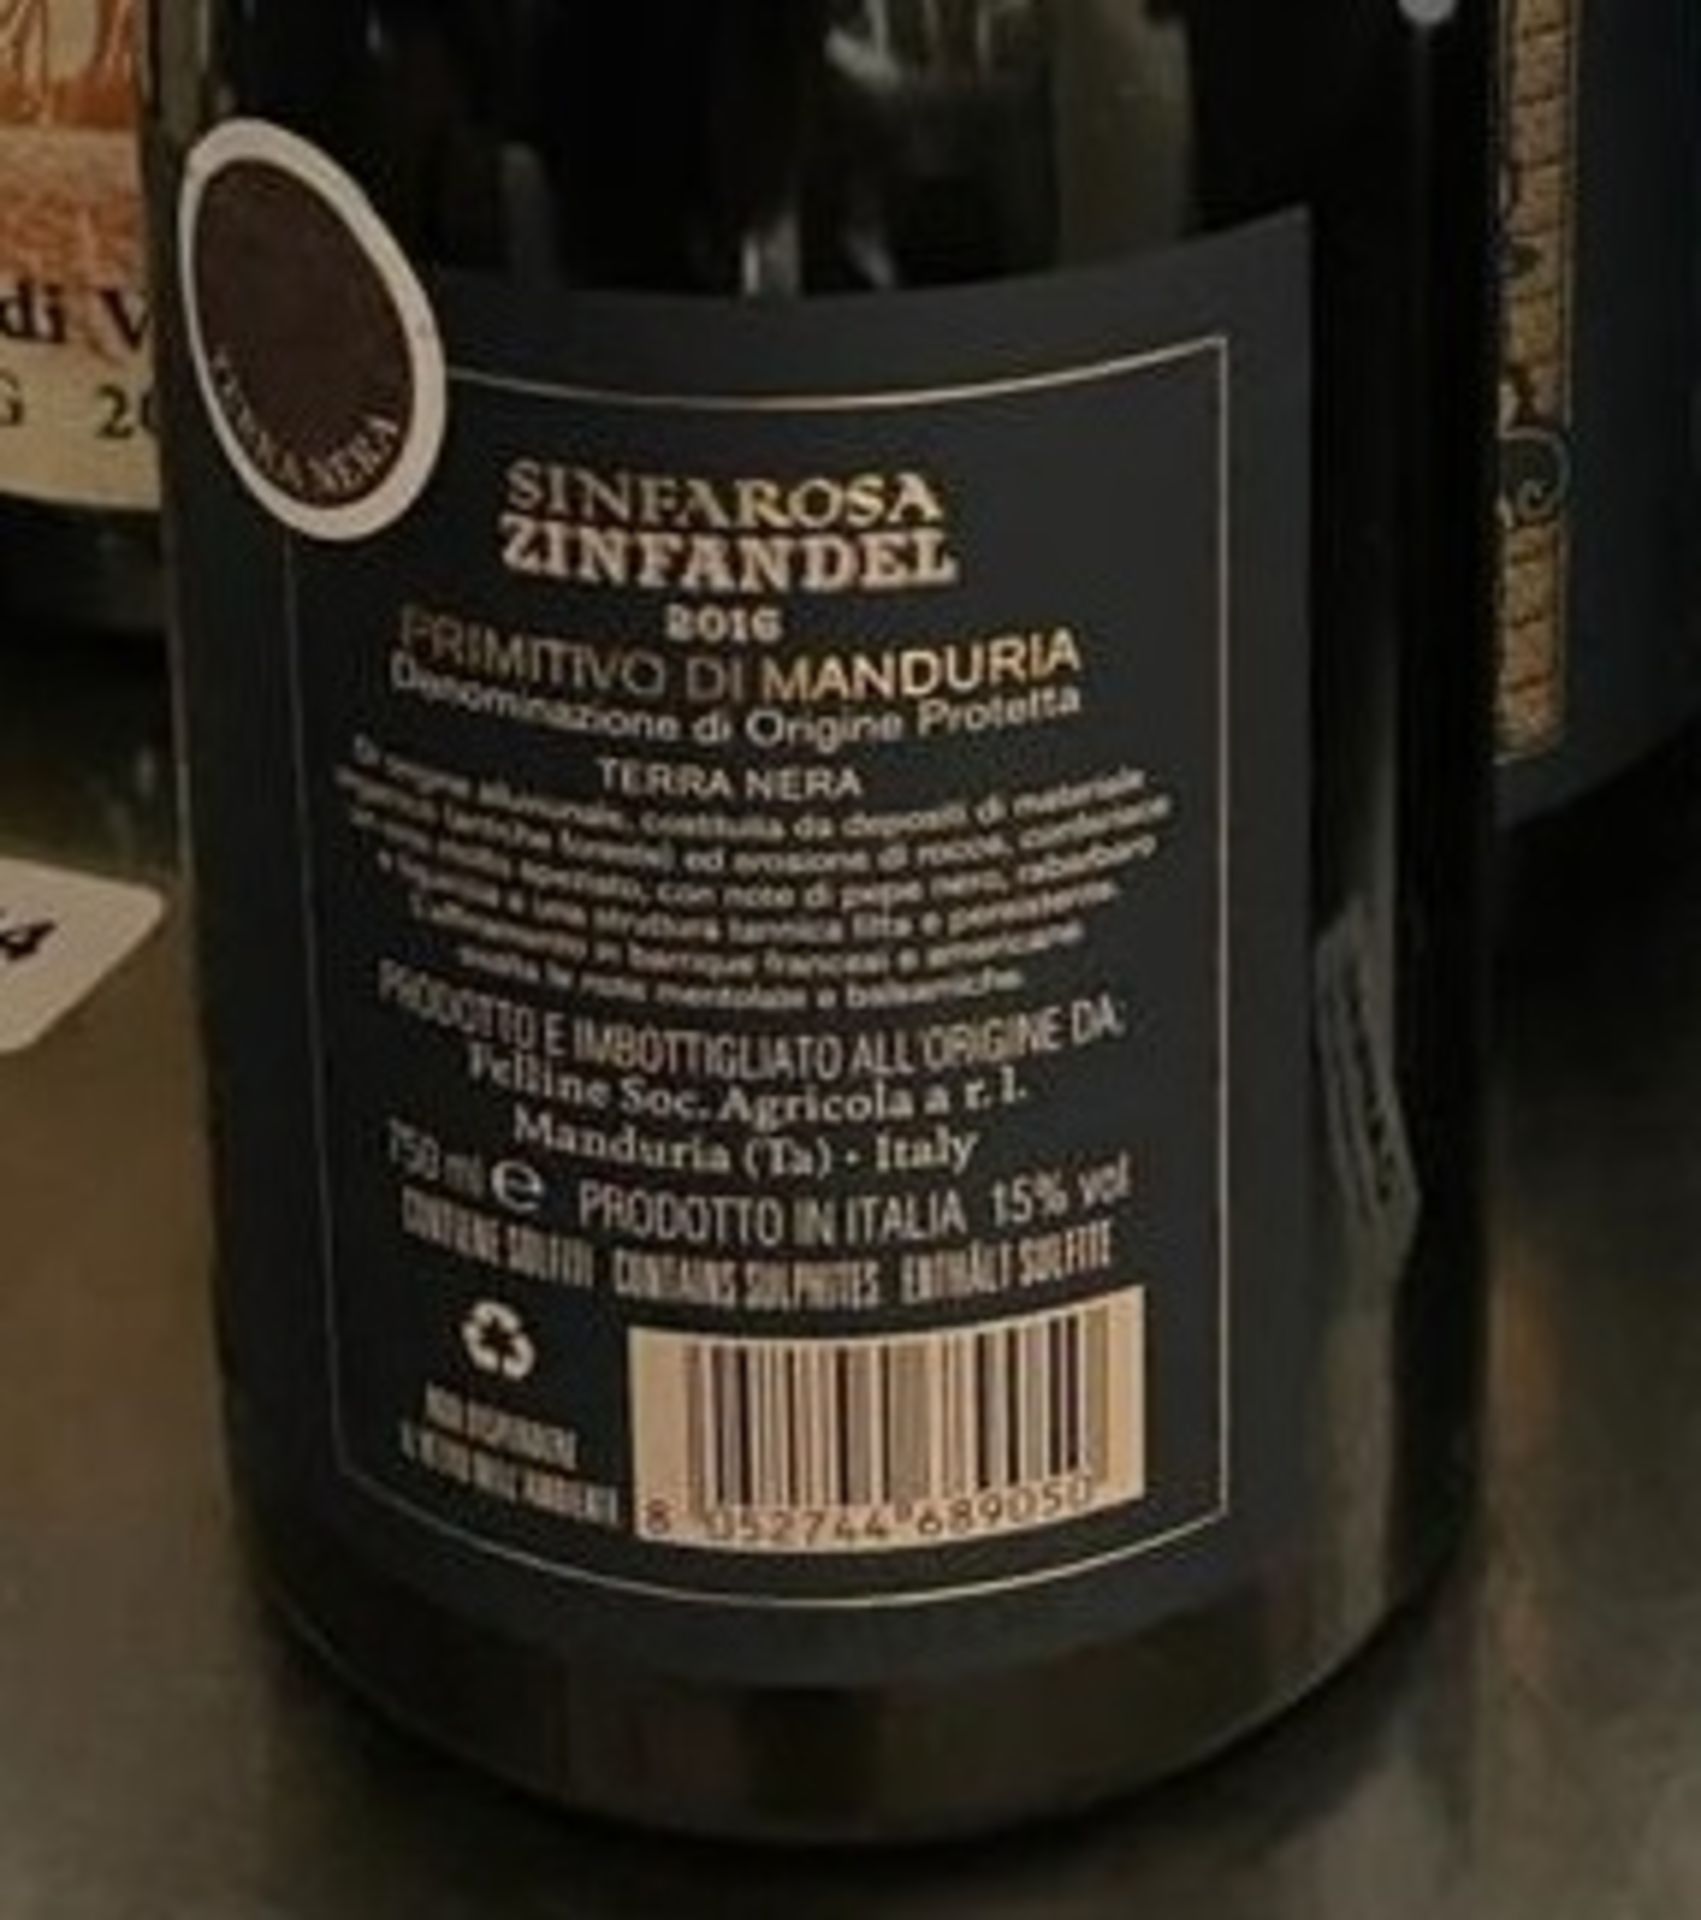 3 x Bottles Of SINFAROSA ZINFANDEL - New/Unopened Restaurant Stock - Ref: CAM643 - CL612 - Location: - Image 2 of 4